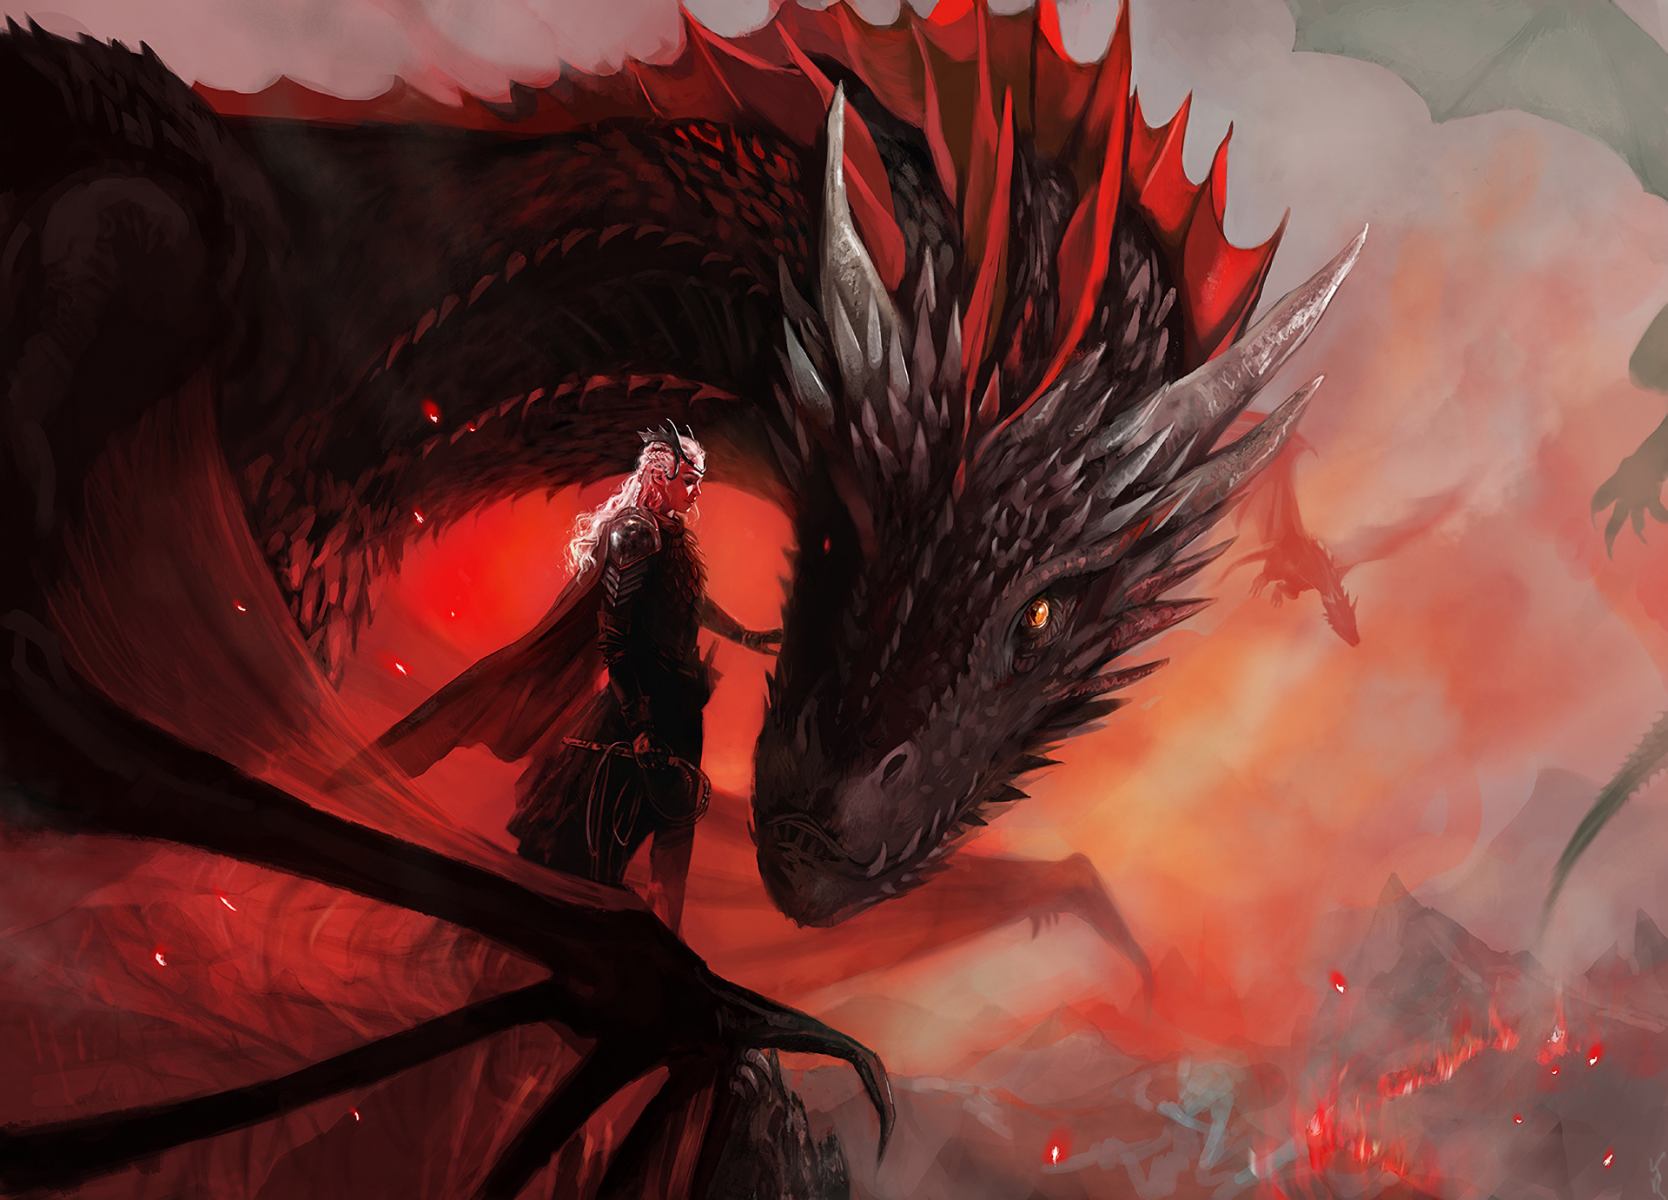 4K wallpaper: High Resolution Game Of Thrones Dragon Wallpaper Hd